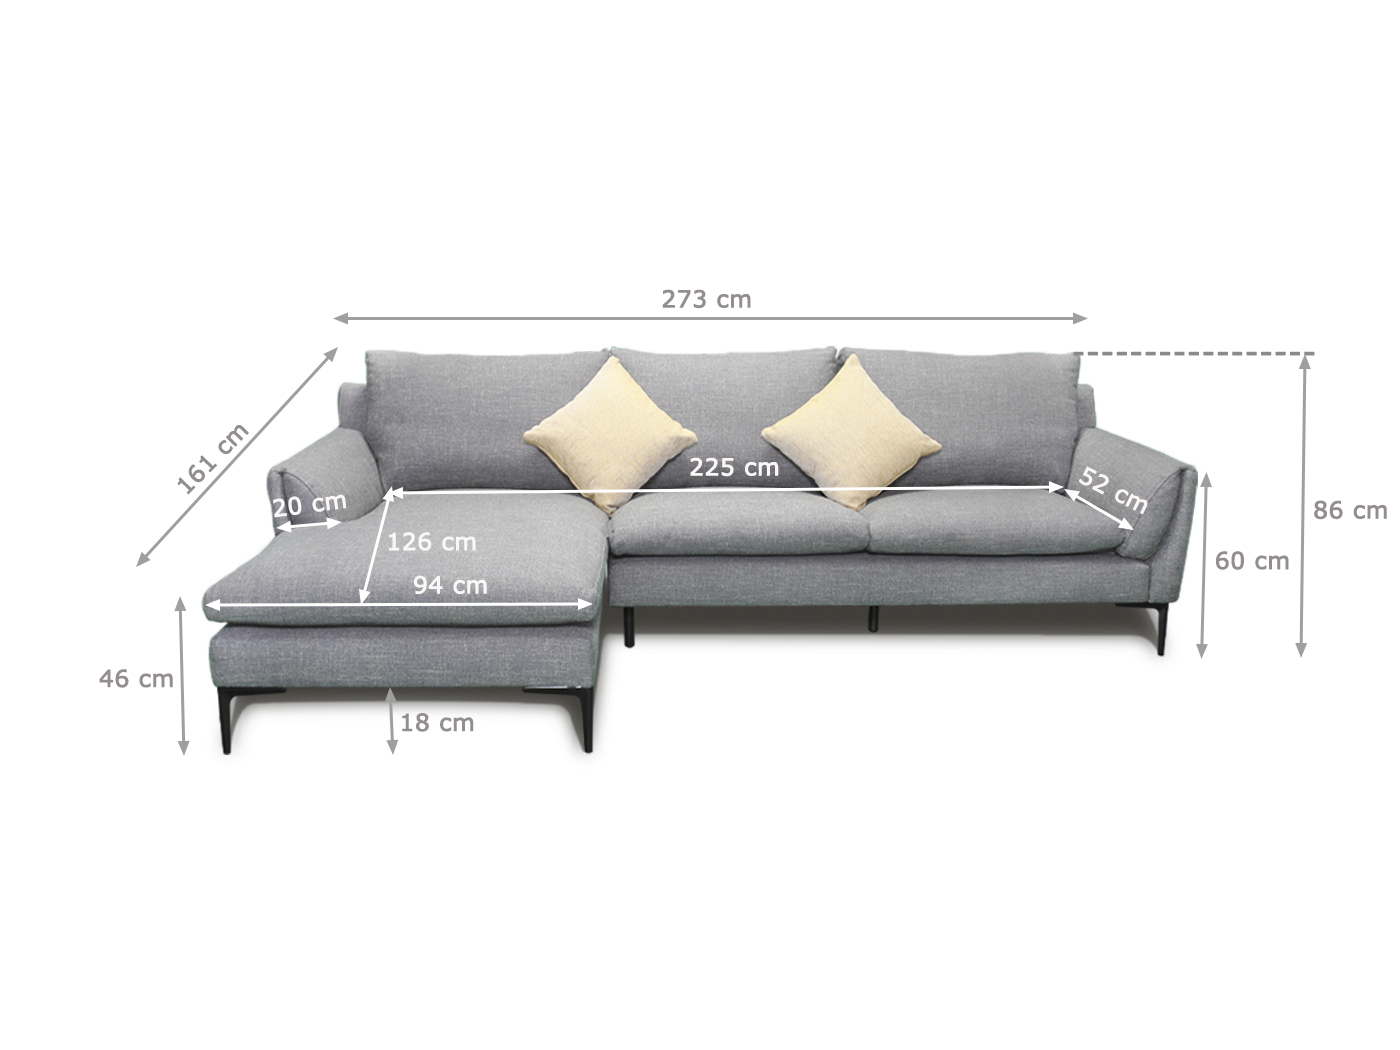 Sofa vải nỉ KUKA KF2037